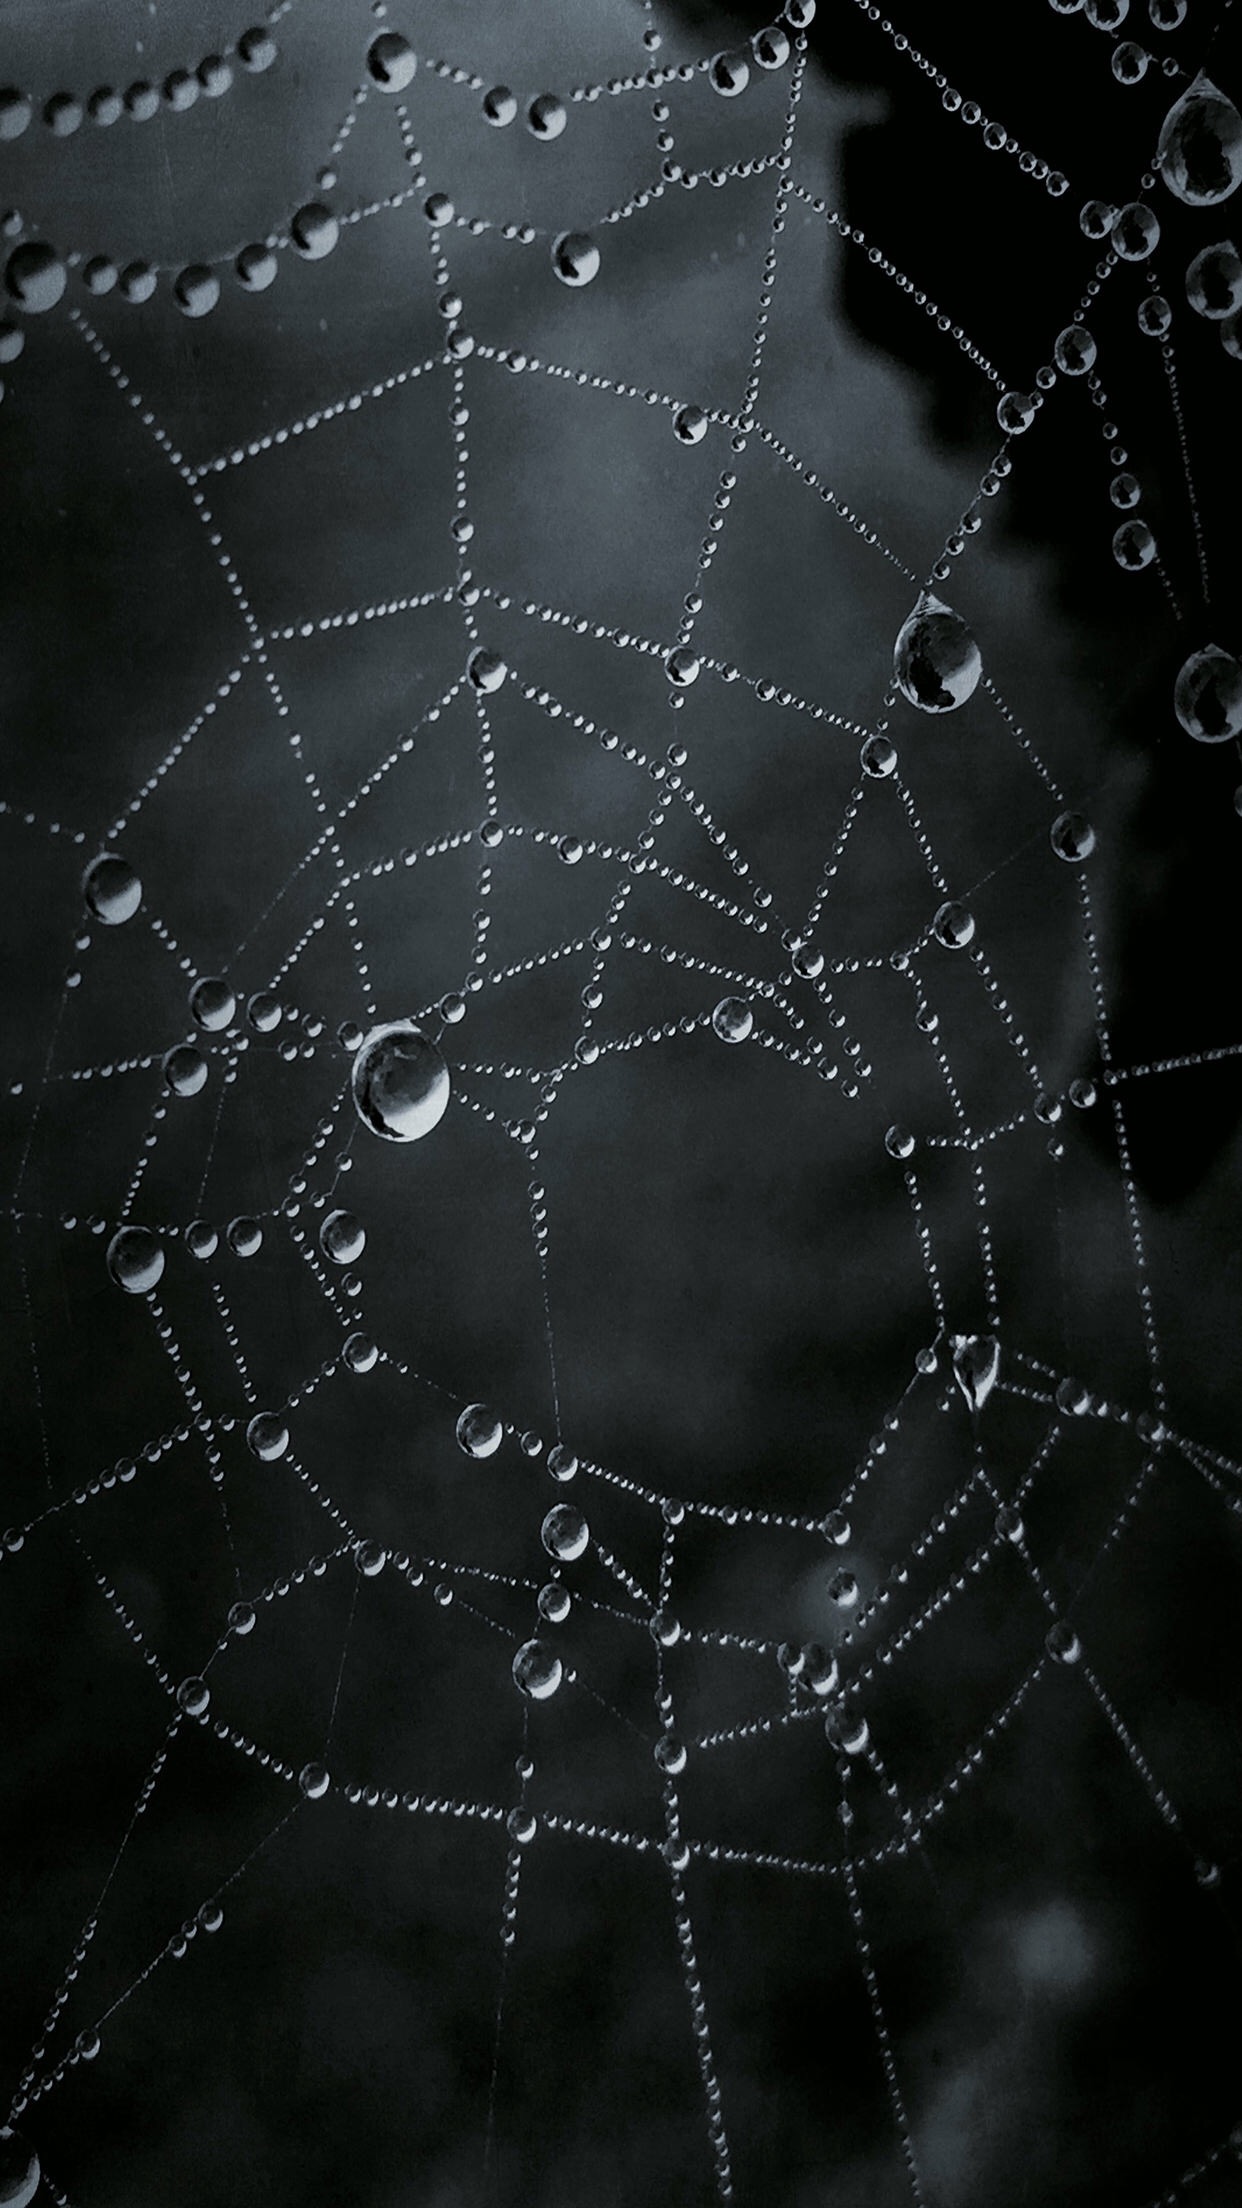 Portrait Display Vertical Landscape Spiderwebs Dark Water Drops Macro Spider Webs 1242x2208